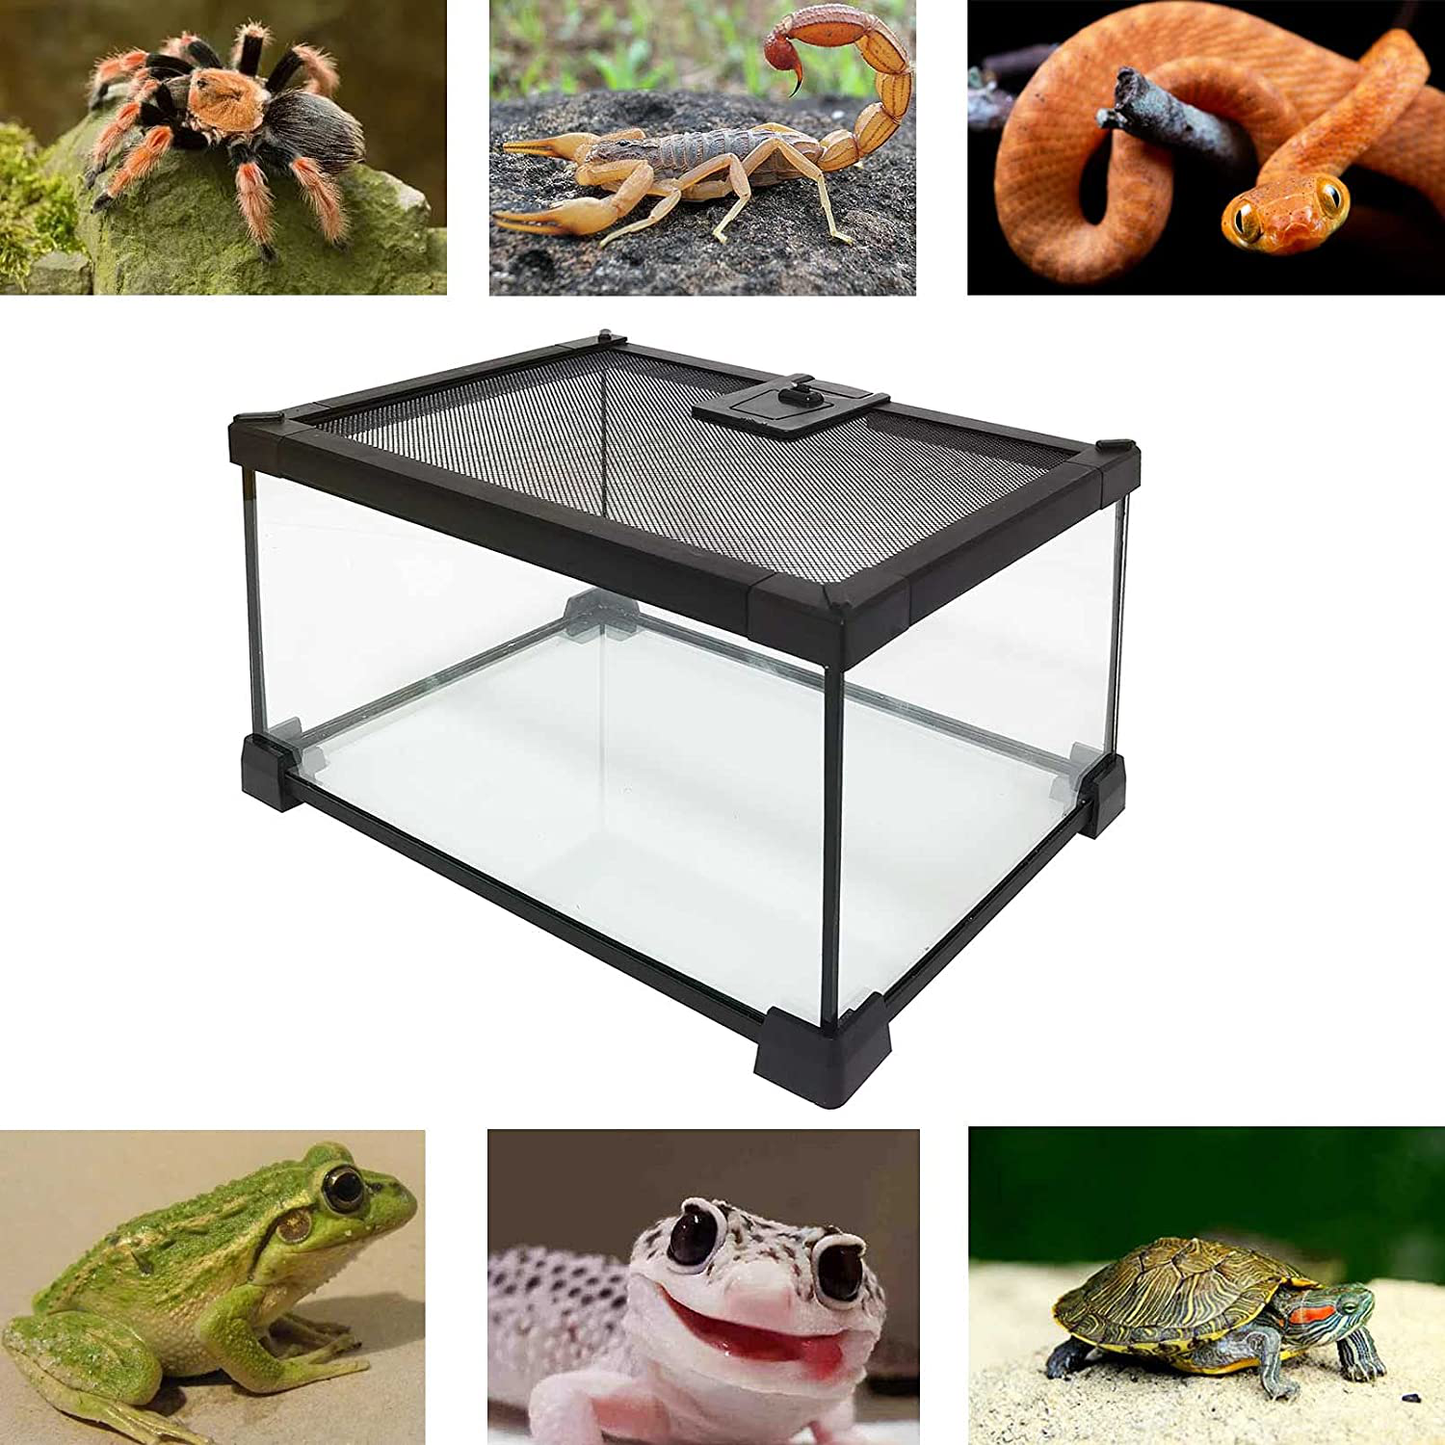 Kathson Mini Reptile Glass Terrarium Tank 12"X8"X6" Amphibians Habitat Cage Full View Visually Appealing Sliding Screen Top for Bearded Dragons Lizards Geckos Hermit Crab Frog